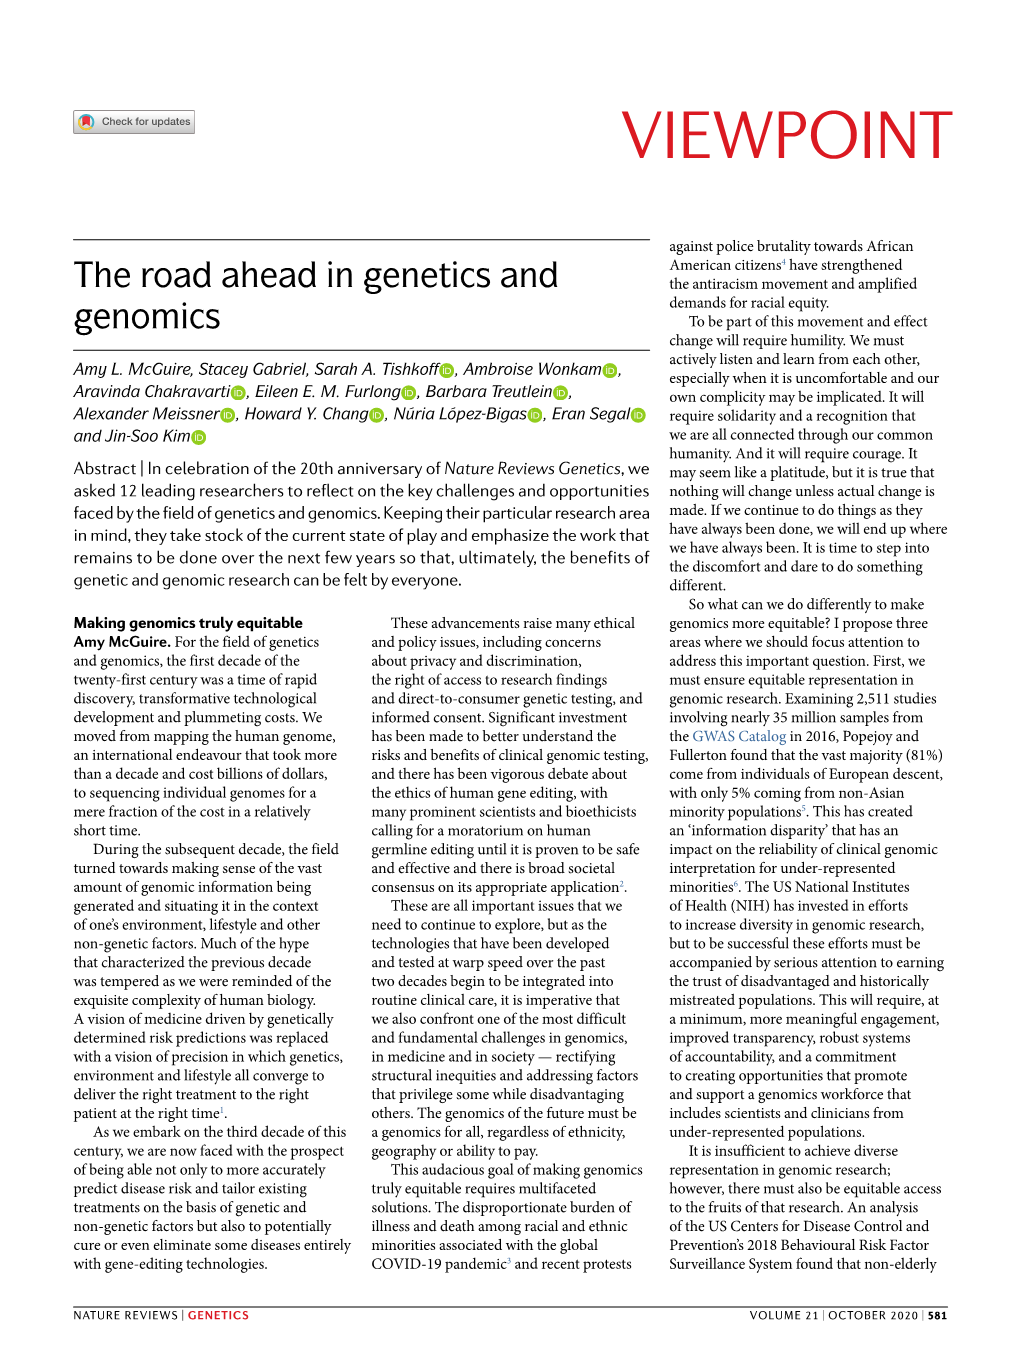 The Road Ahead in Genetics and Genomics